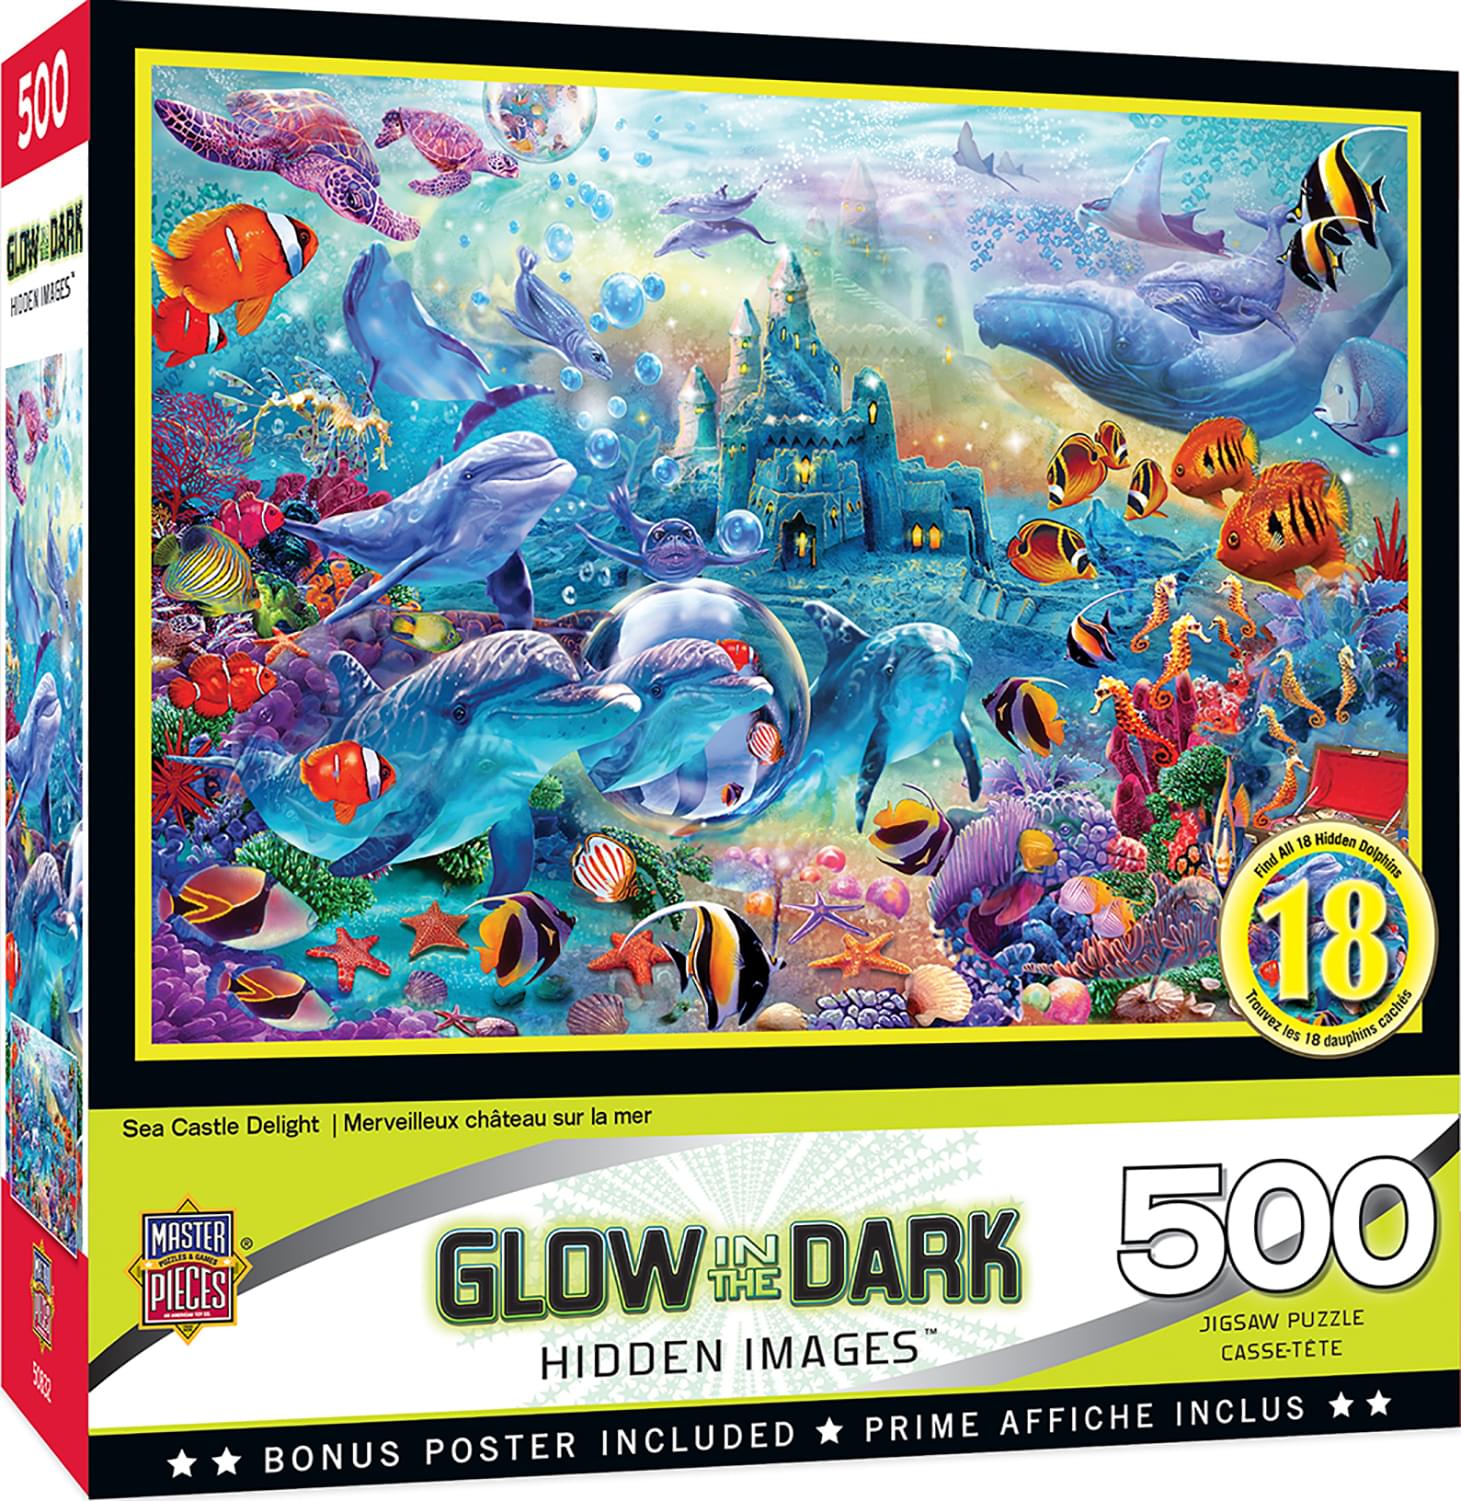 Sea Castle Delight 500 Piece Hidden Images Glow In The Dark Jigsaw Puzzle